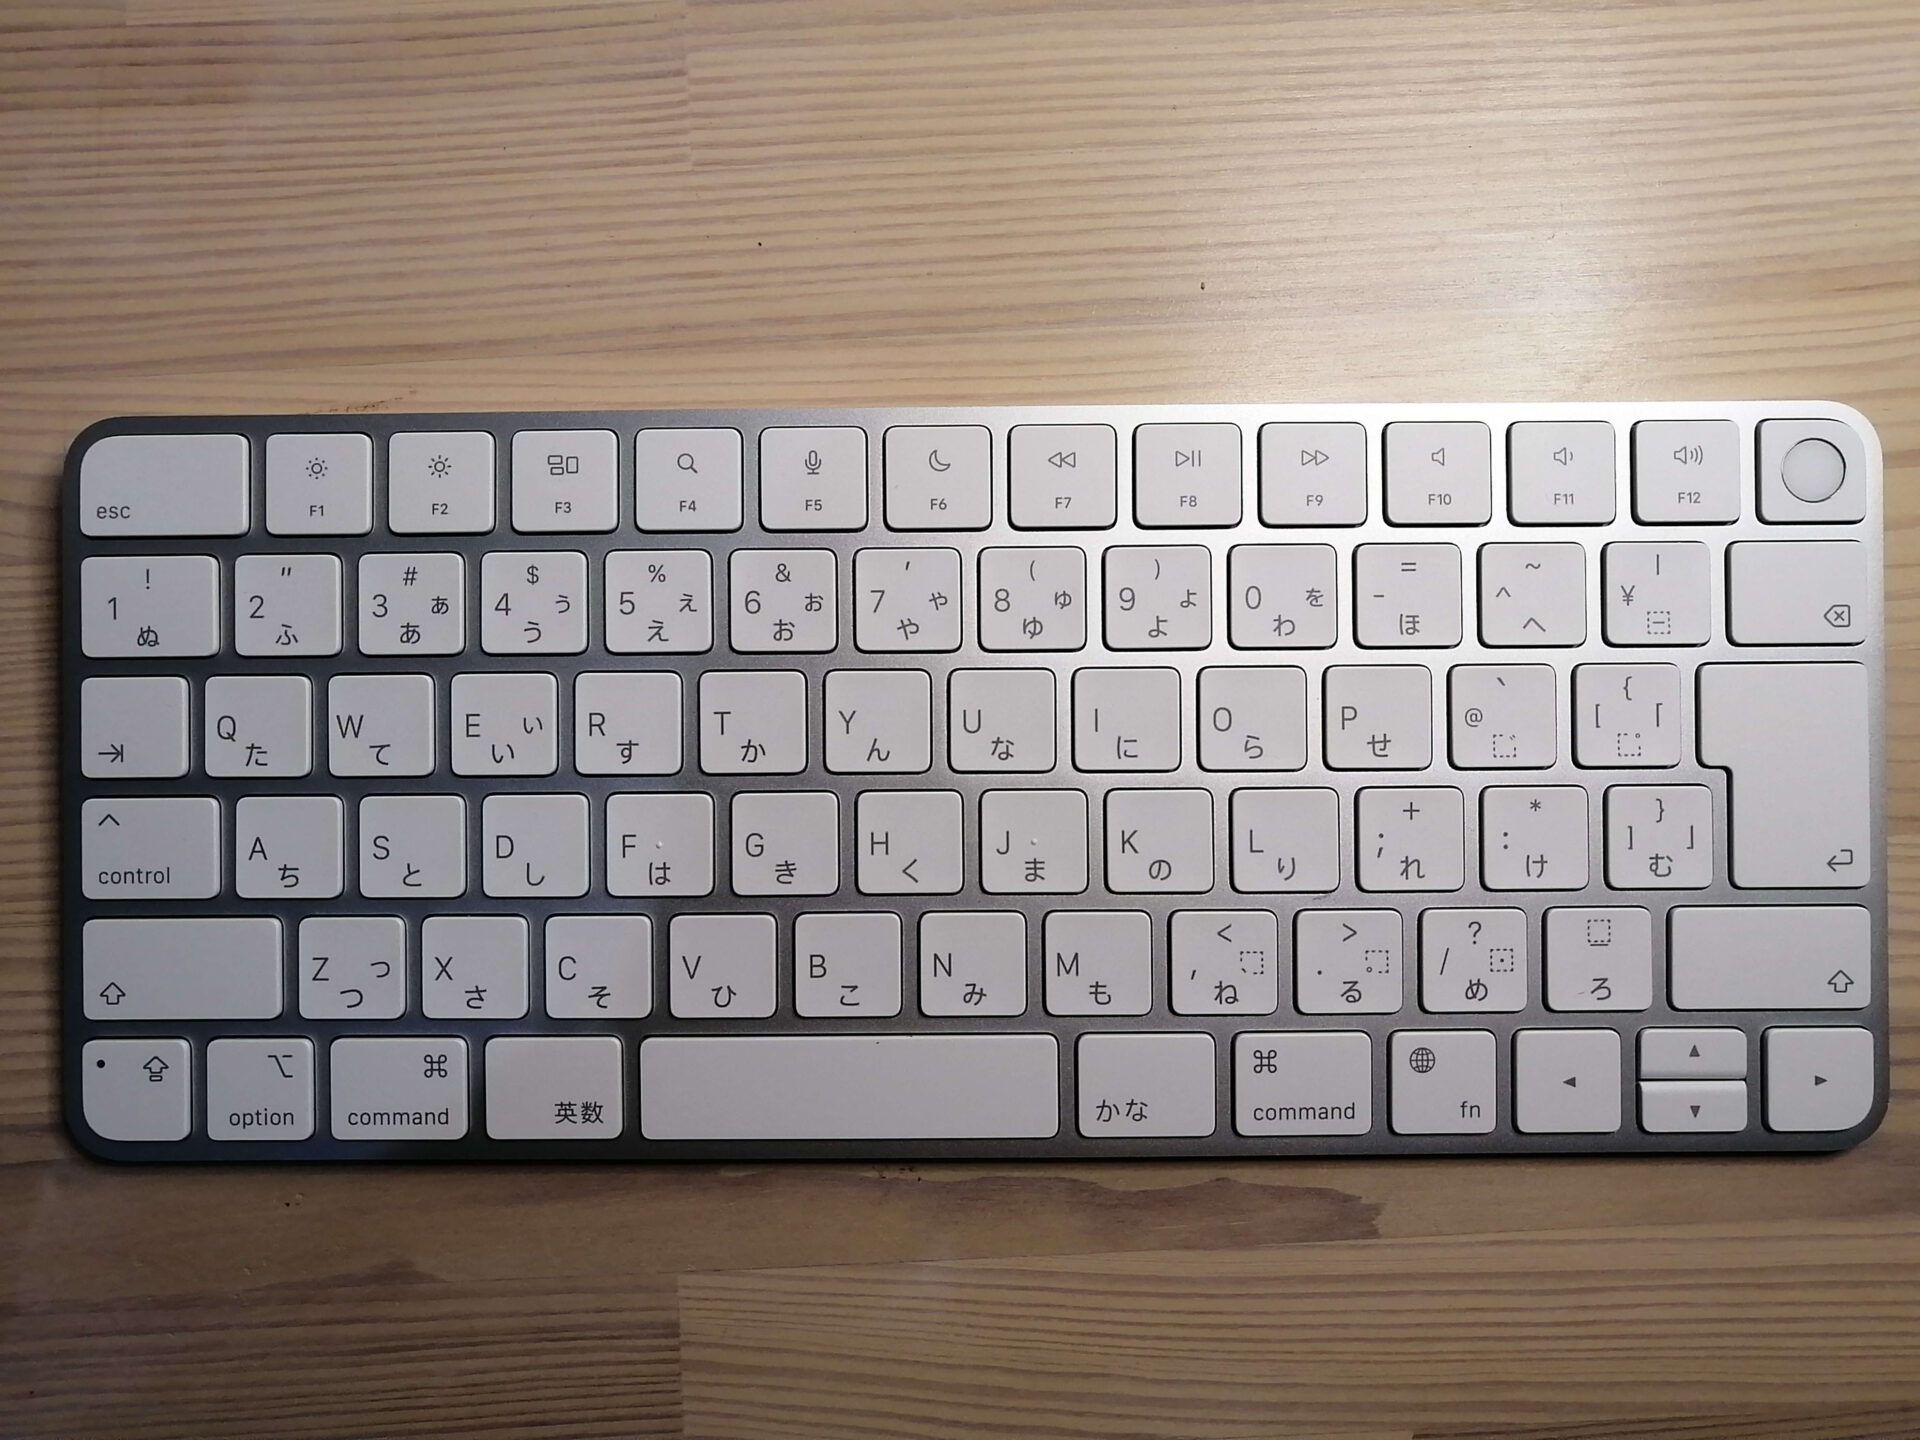 magic keyboard(テンキー付き)日本語(JIS) 訳ありキーボード